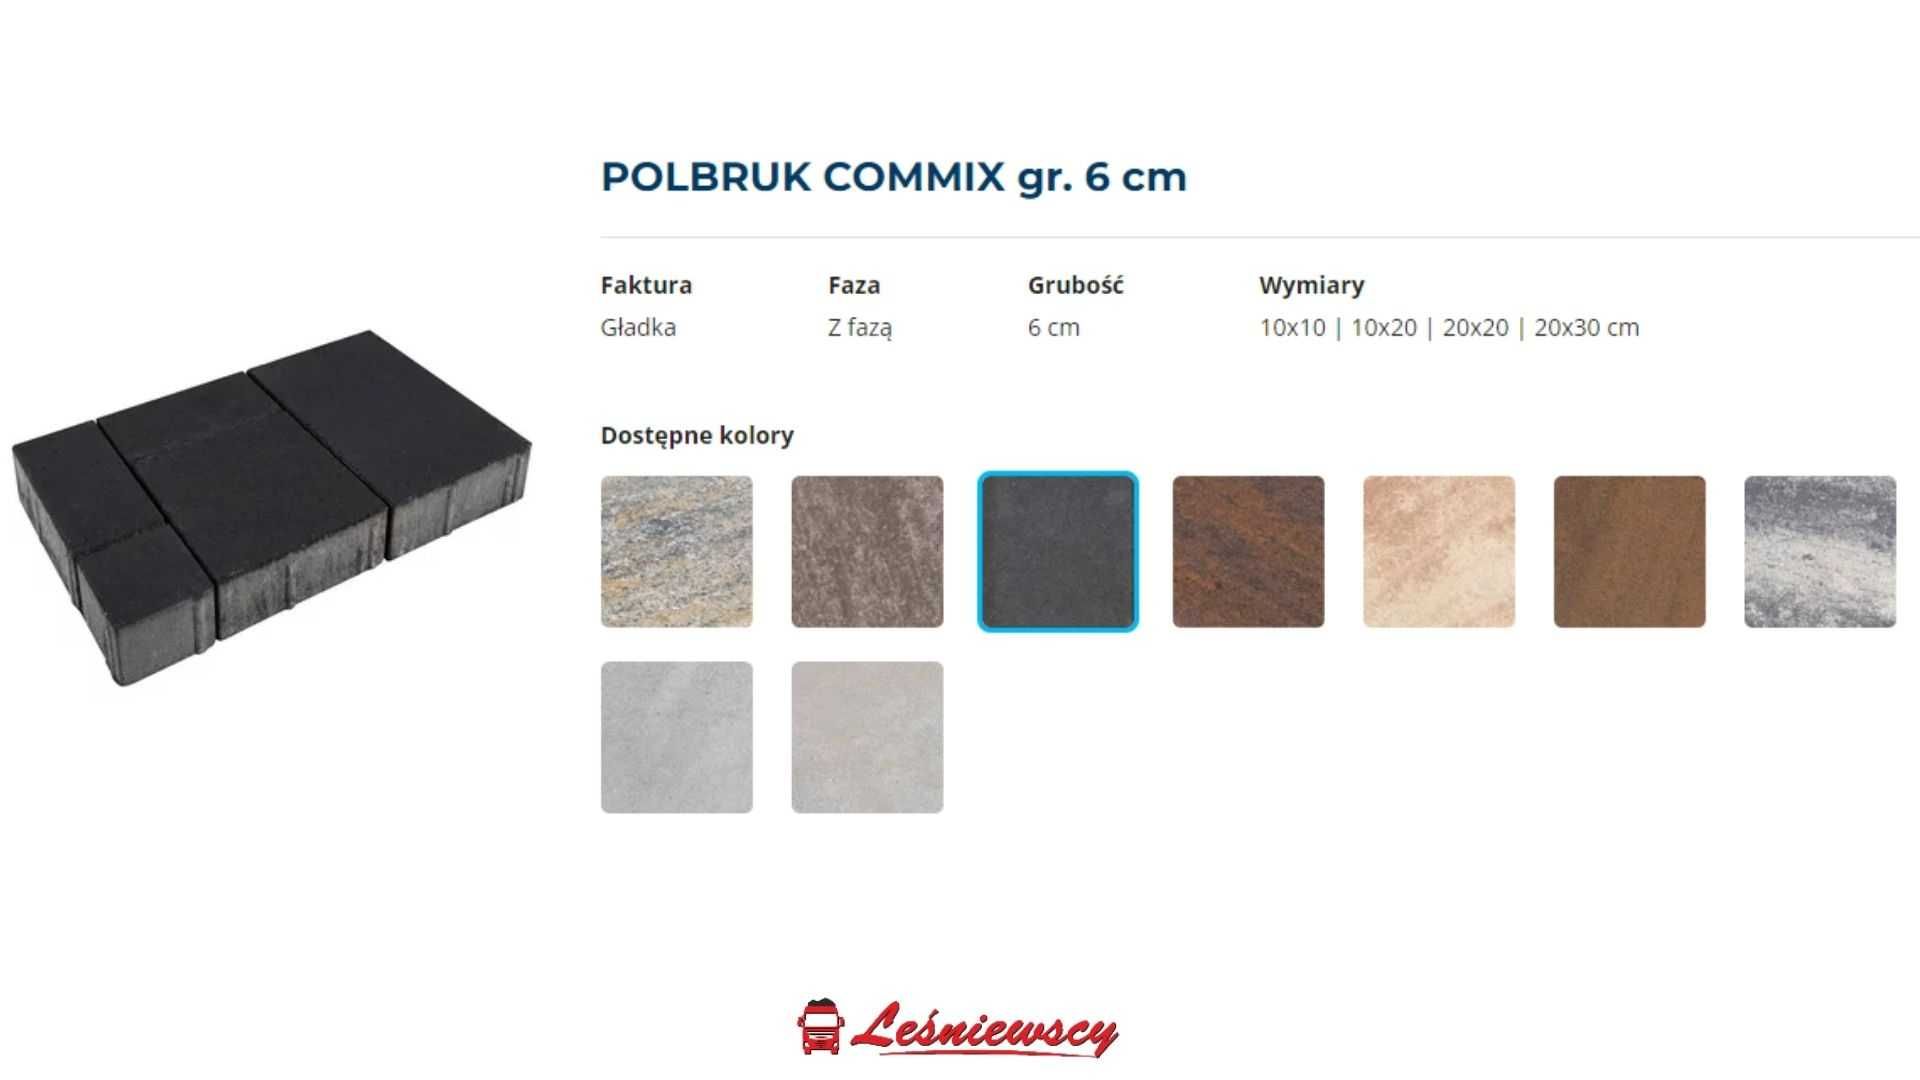 Kostka brukowa Polbruk - COMMIX kolor grafit 6cm na podjaz/chodnik itp